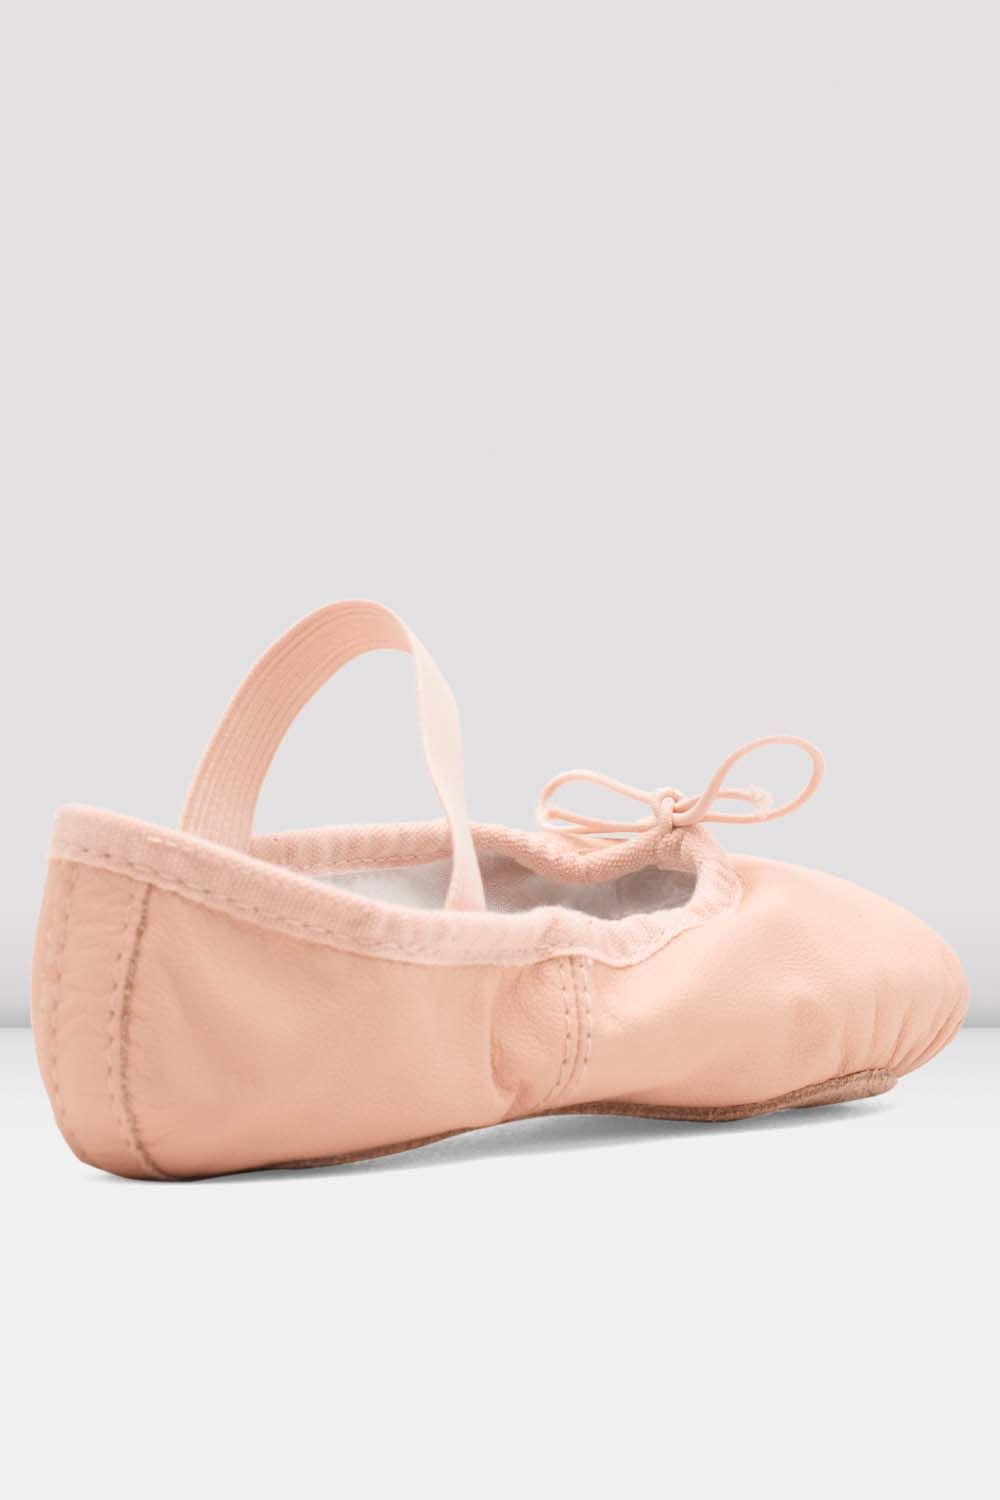 Childrens Dansoft Leather Ballet Shoes, Pink – BLOCH Dance US